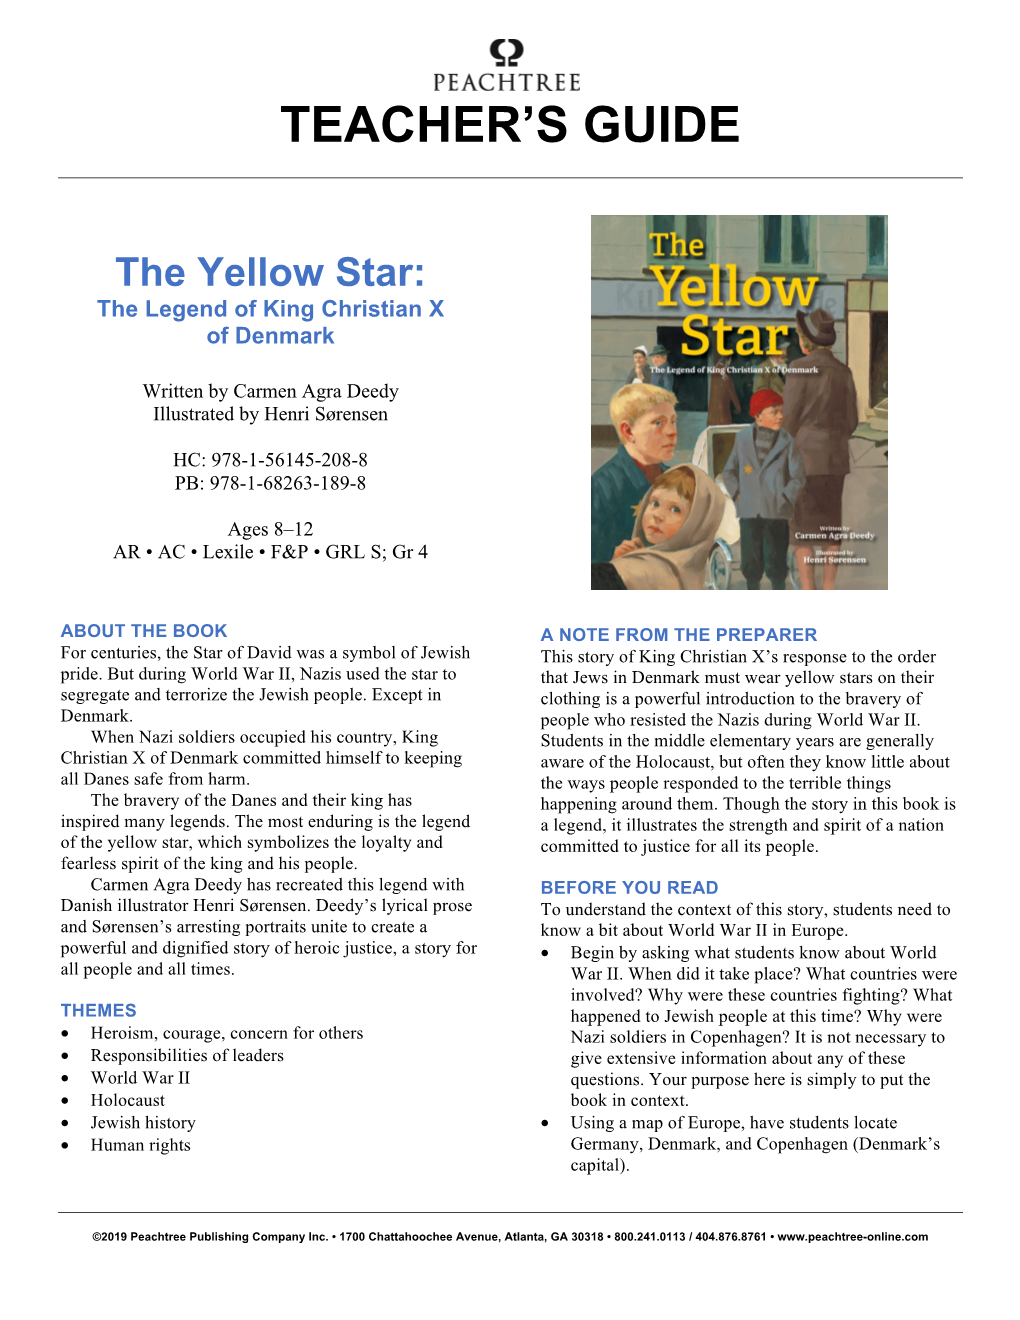 The Yellow Star | Teacher's Guide